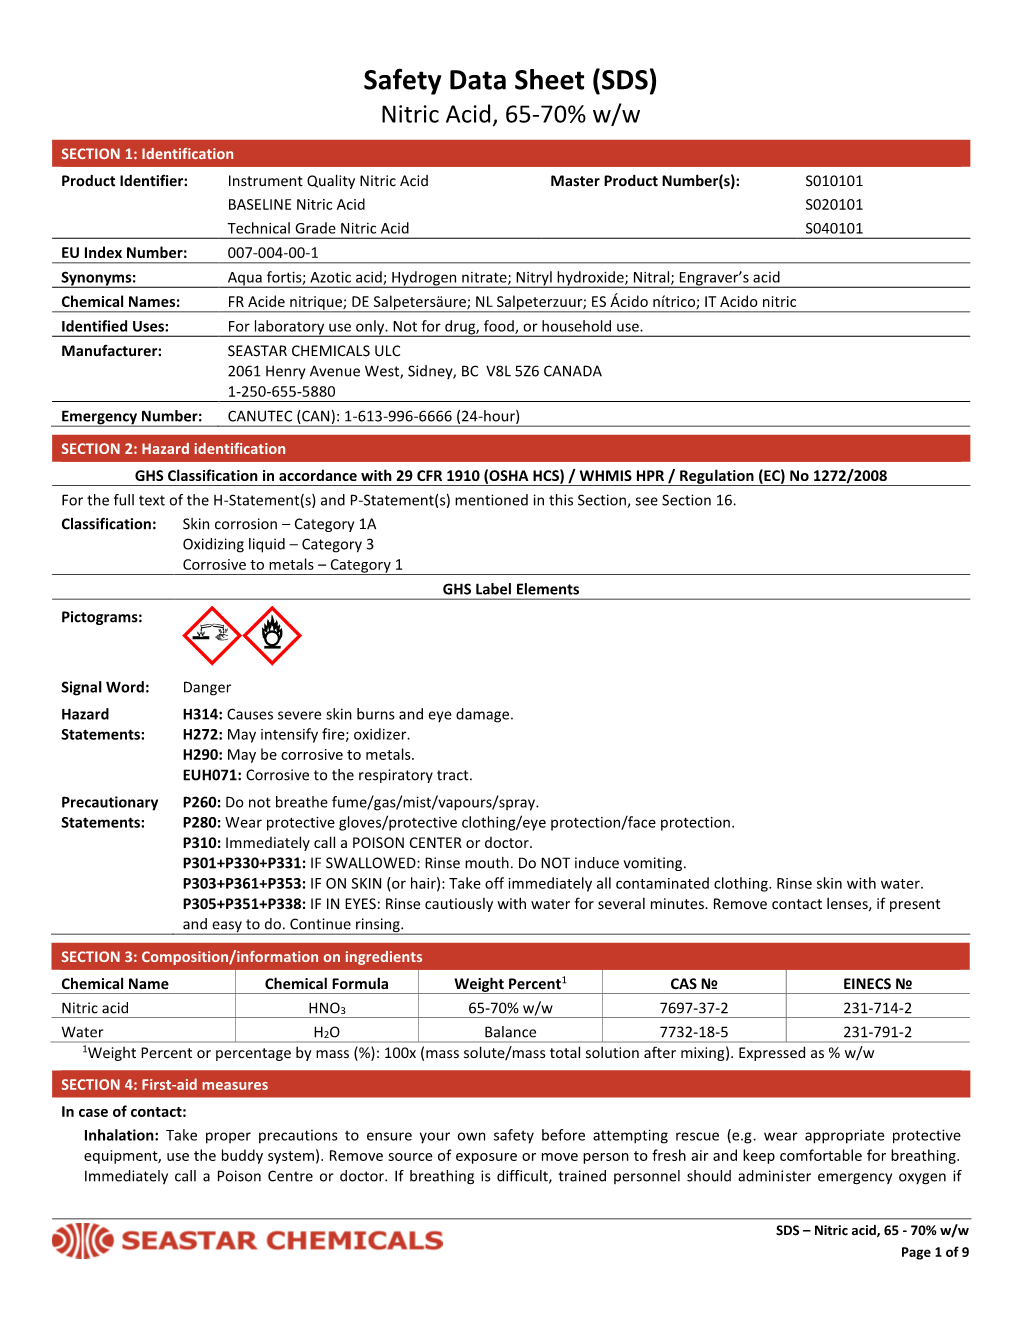 Safety Data Sheet (SDS) Nitric Acid, 65-70% W/W